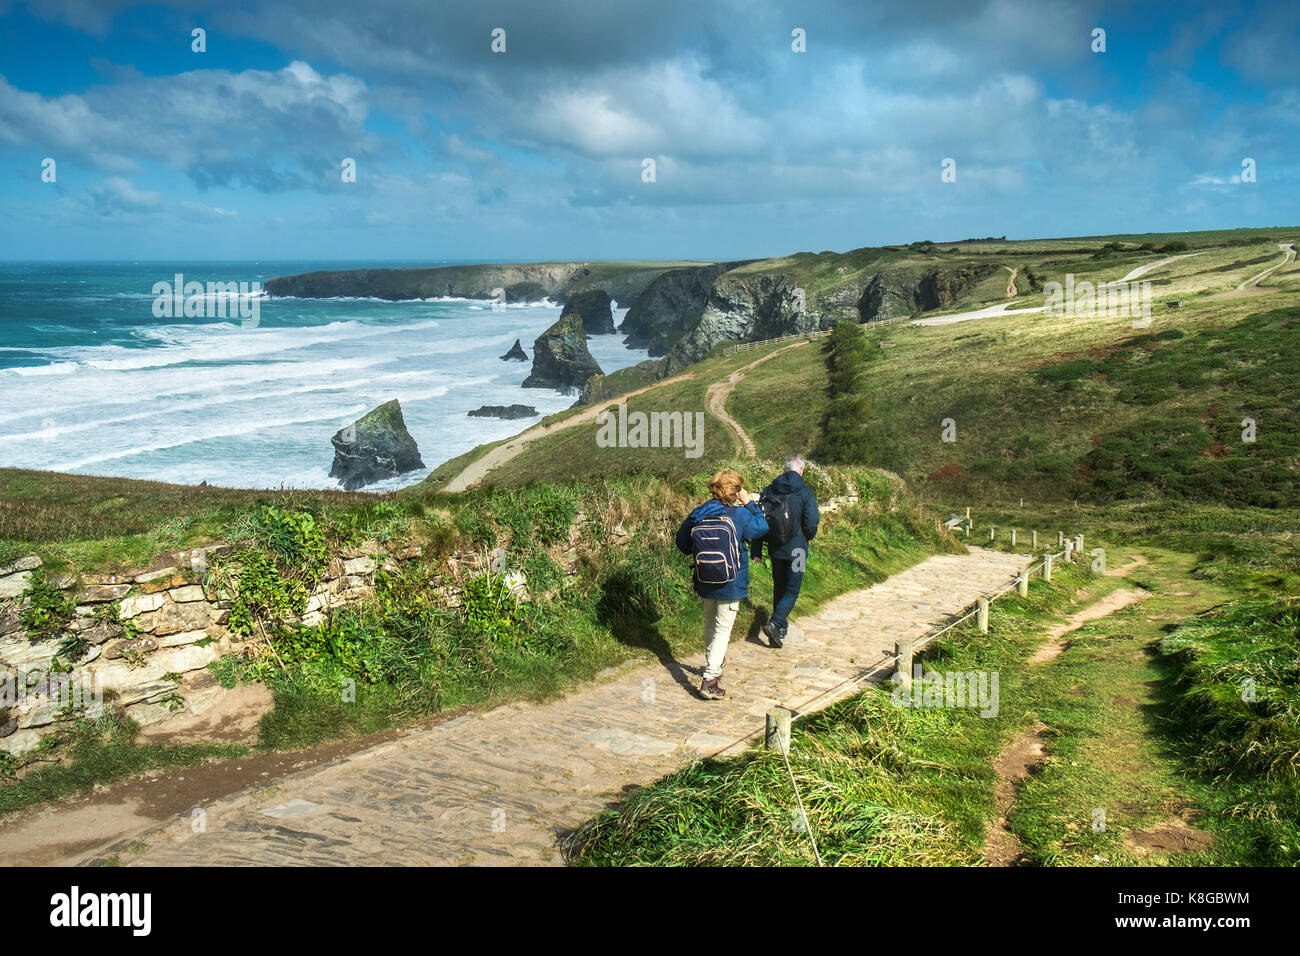 Bedruthan Steps - walkers on the coastal footpath at Bedruthan Steps on the North Cornwall coast. Stock Photo